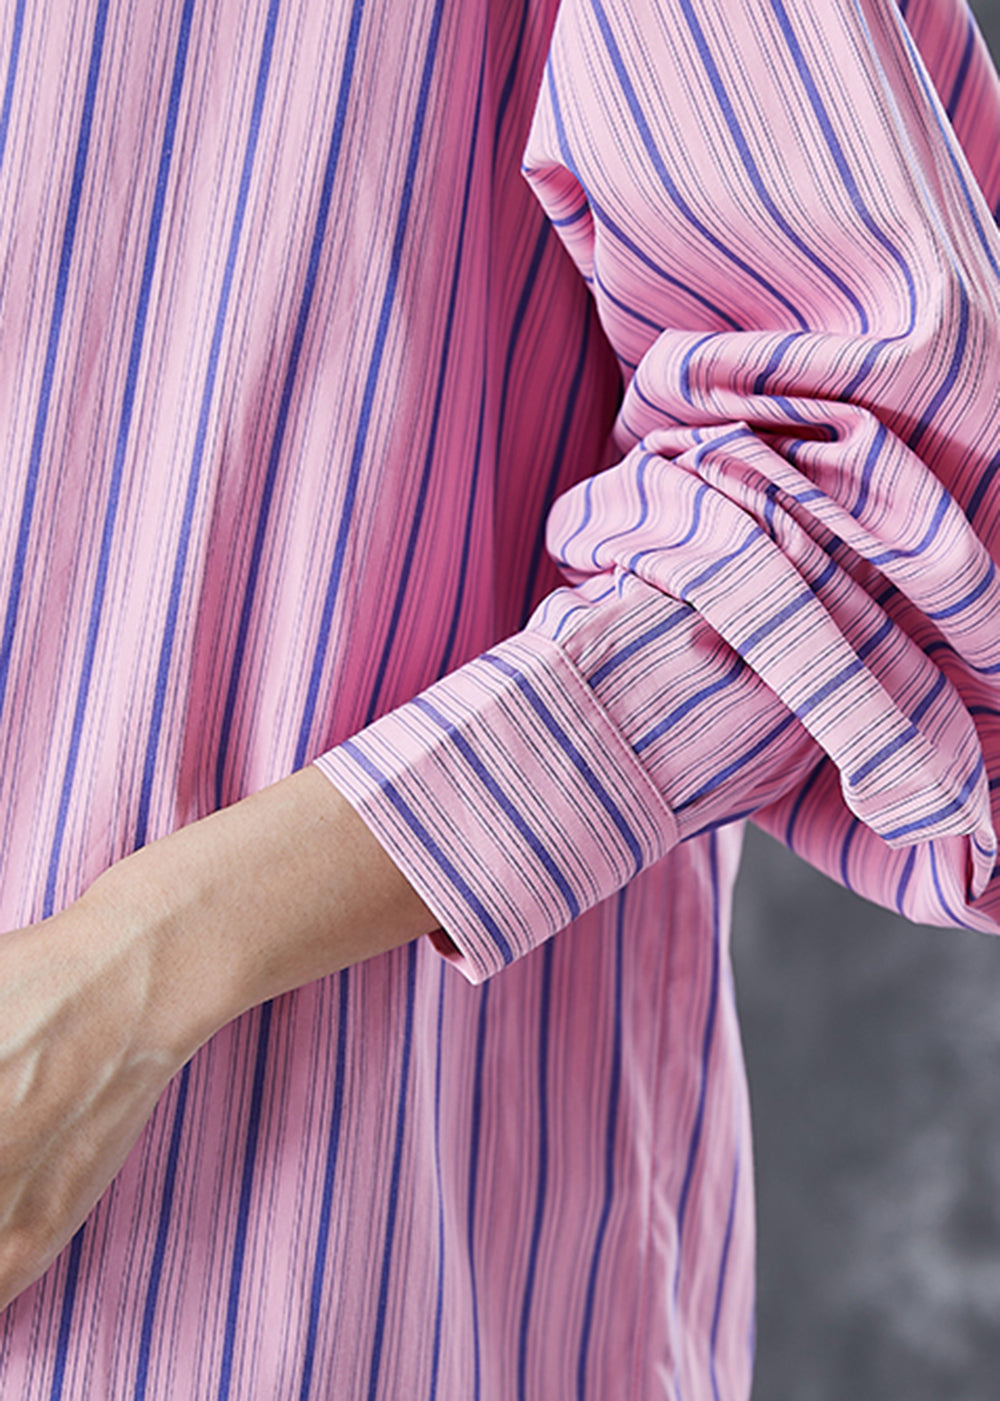 Pink Striped Cotton Shirt Top Oversized Peter Pan Collar Summer Ada Fashion